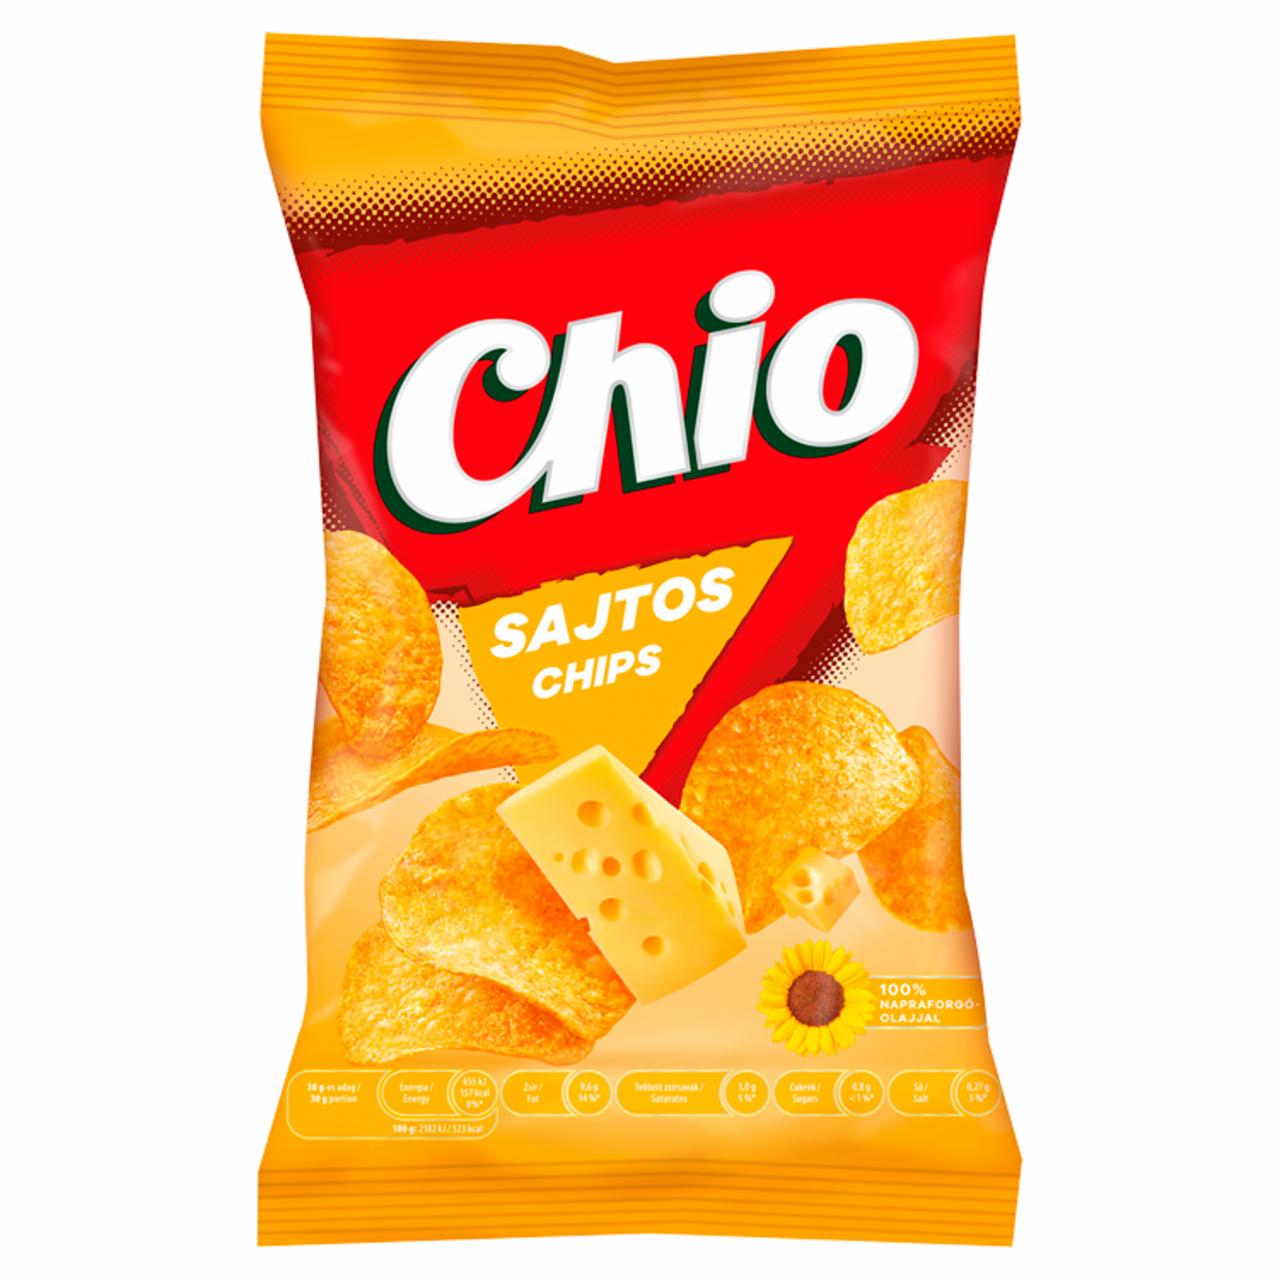 Képek - Chio sajtos chips 60 g